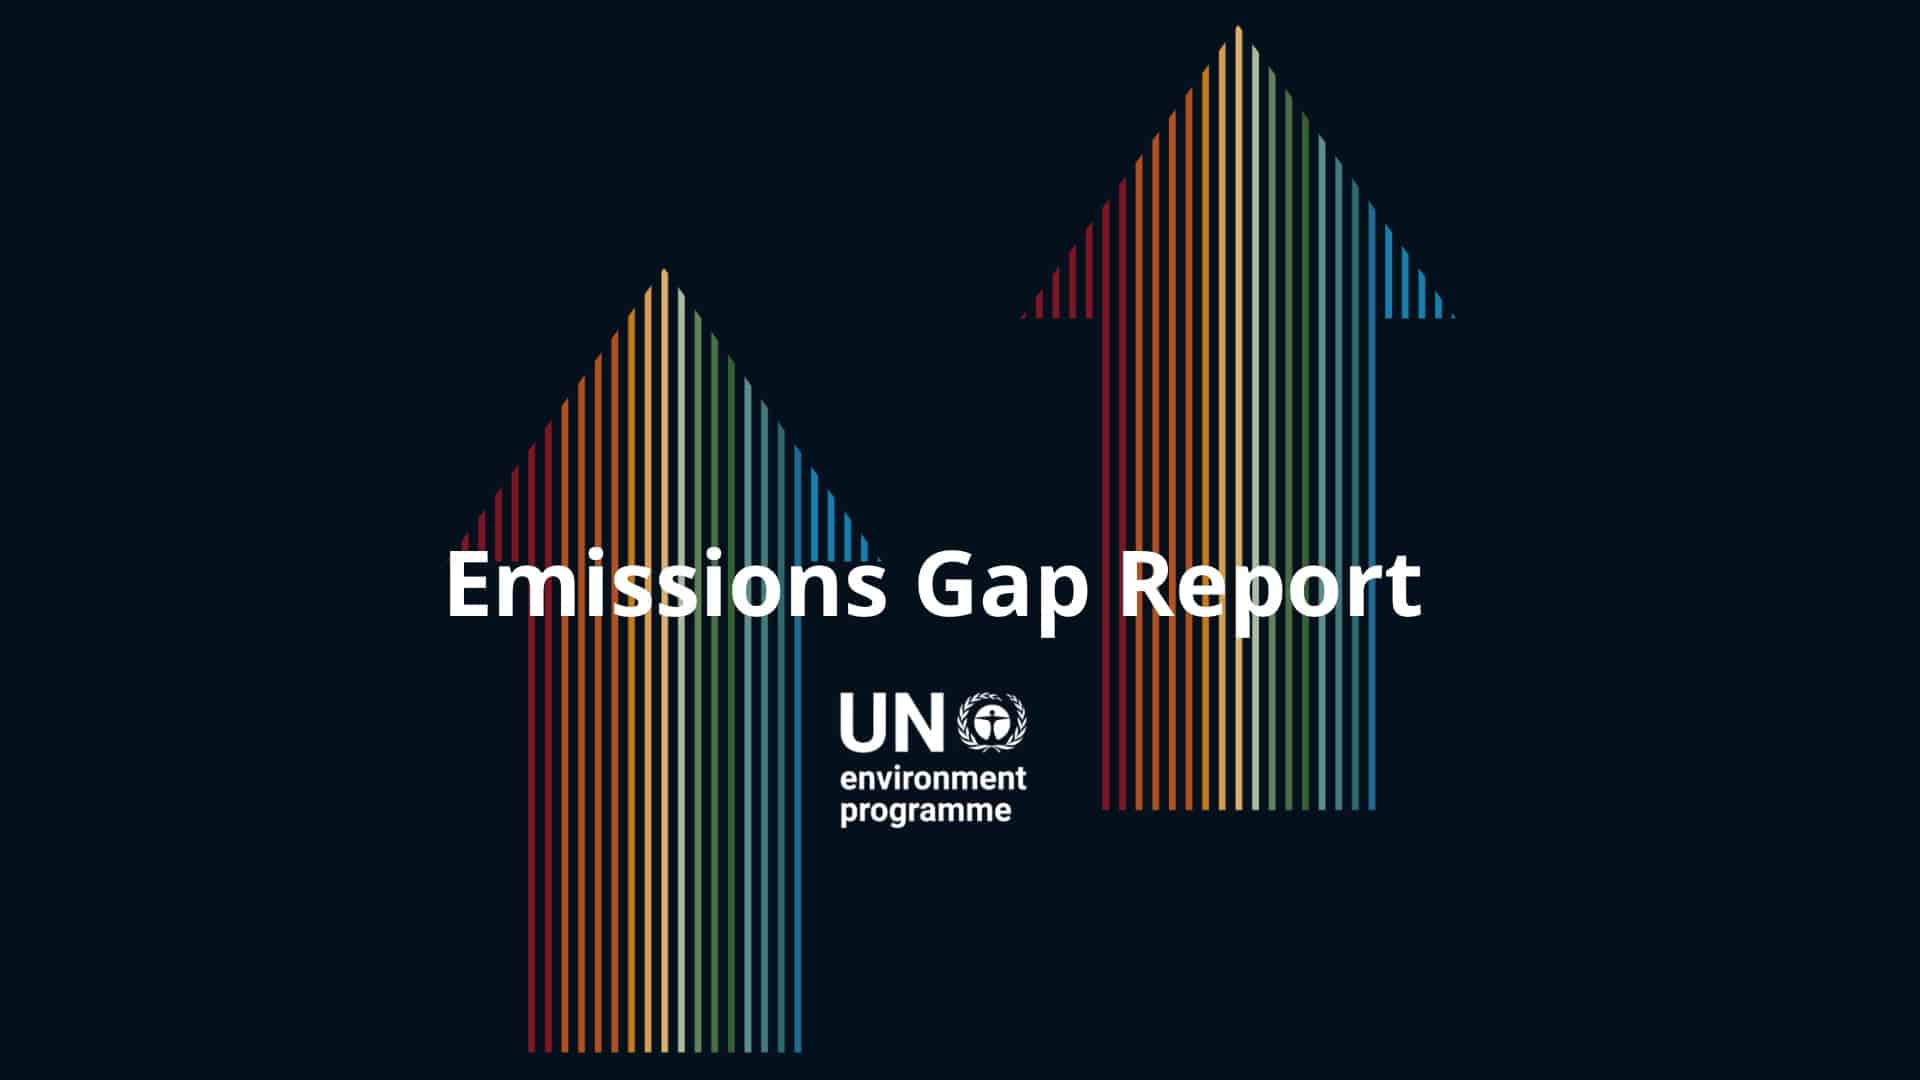 thefuture, Resurs, Emissions Gap Report